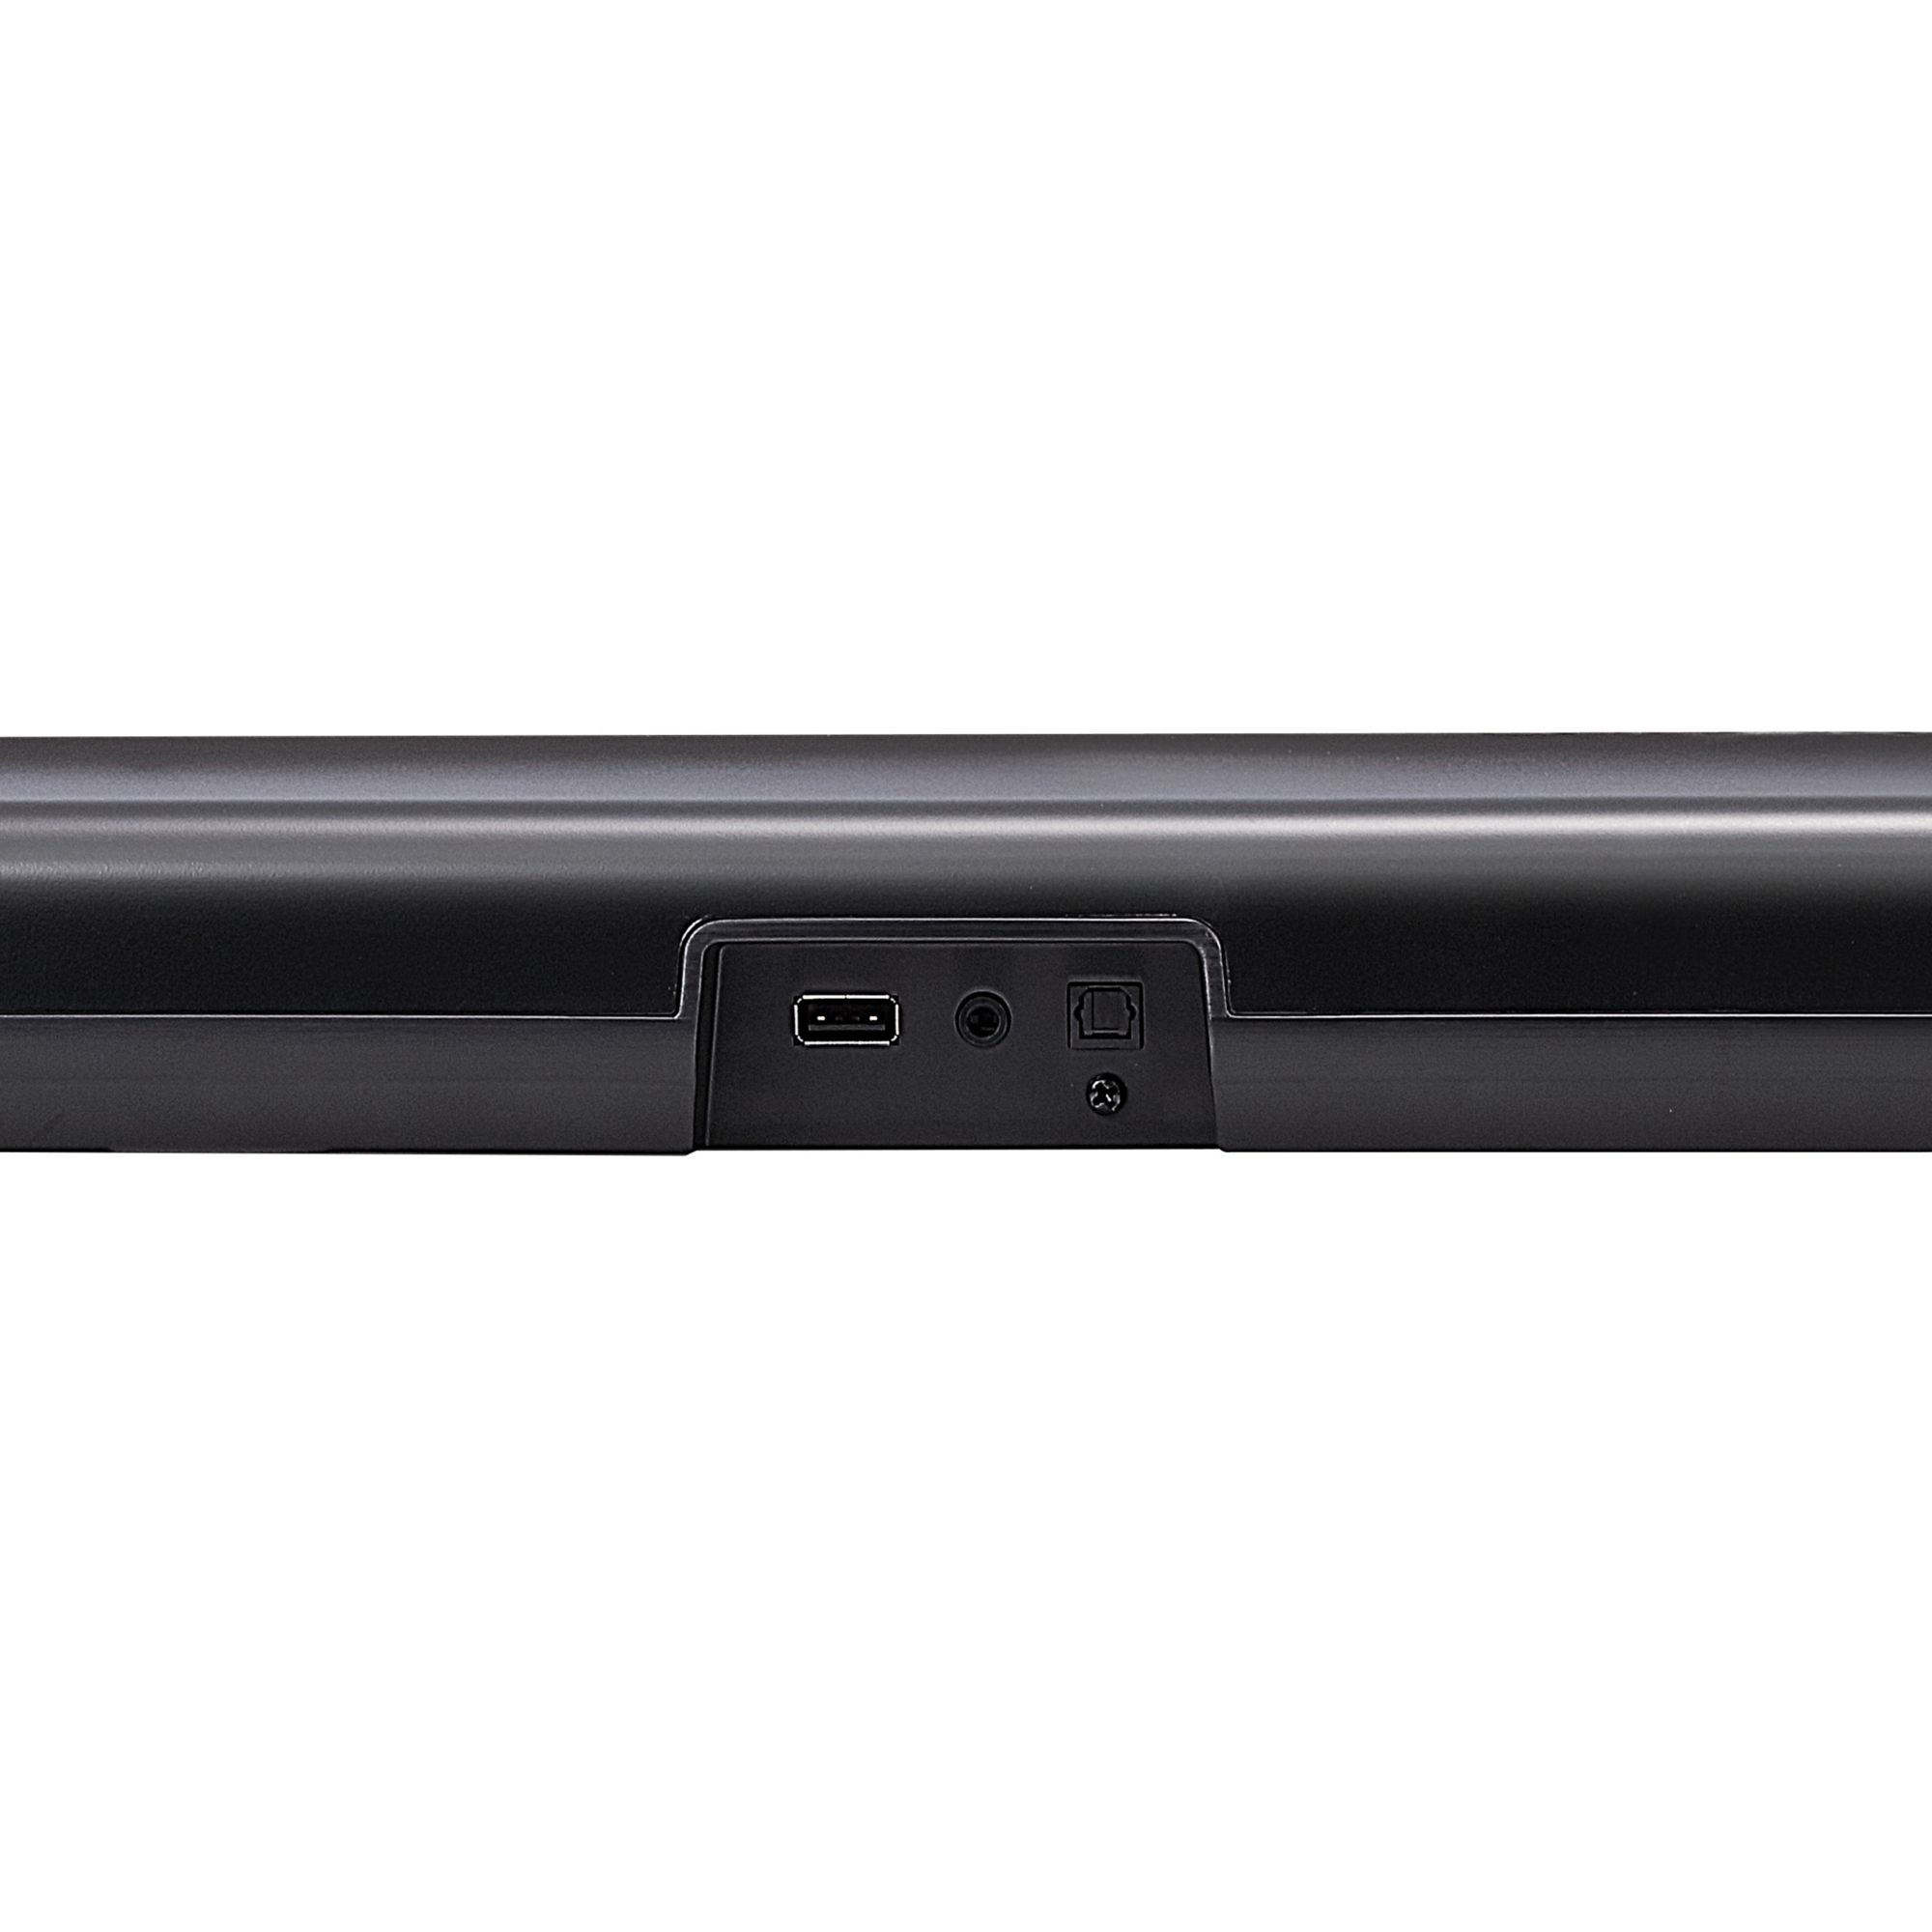  LG SJ2 Soundbar with Subwoofer 2.1 Ch 160W with Bluetooth  Connectivity (Renewed) : Electronics